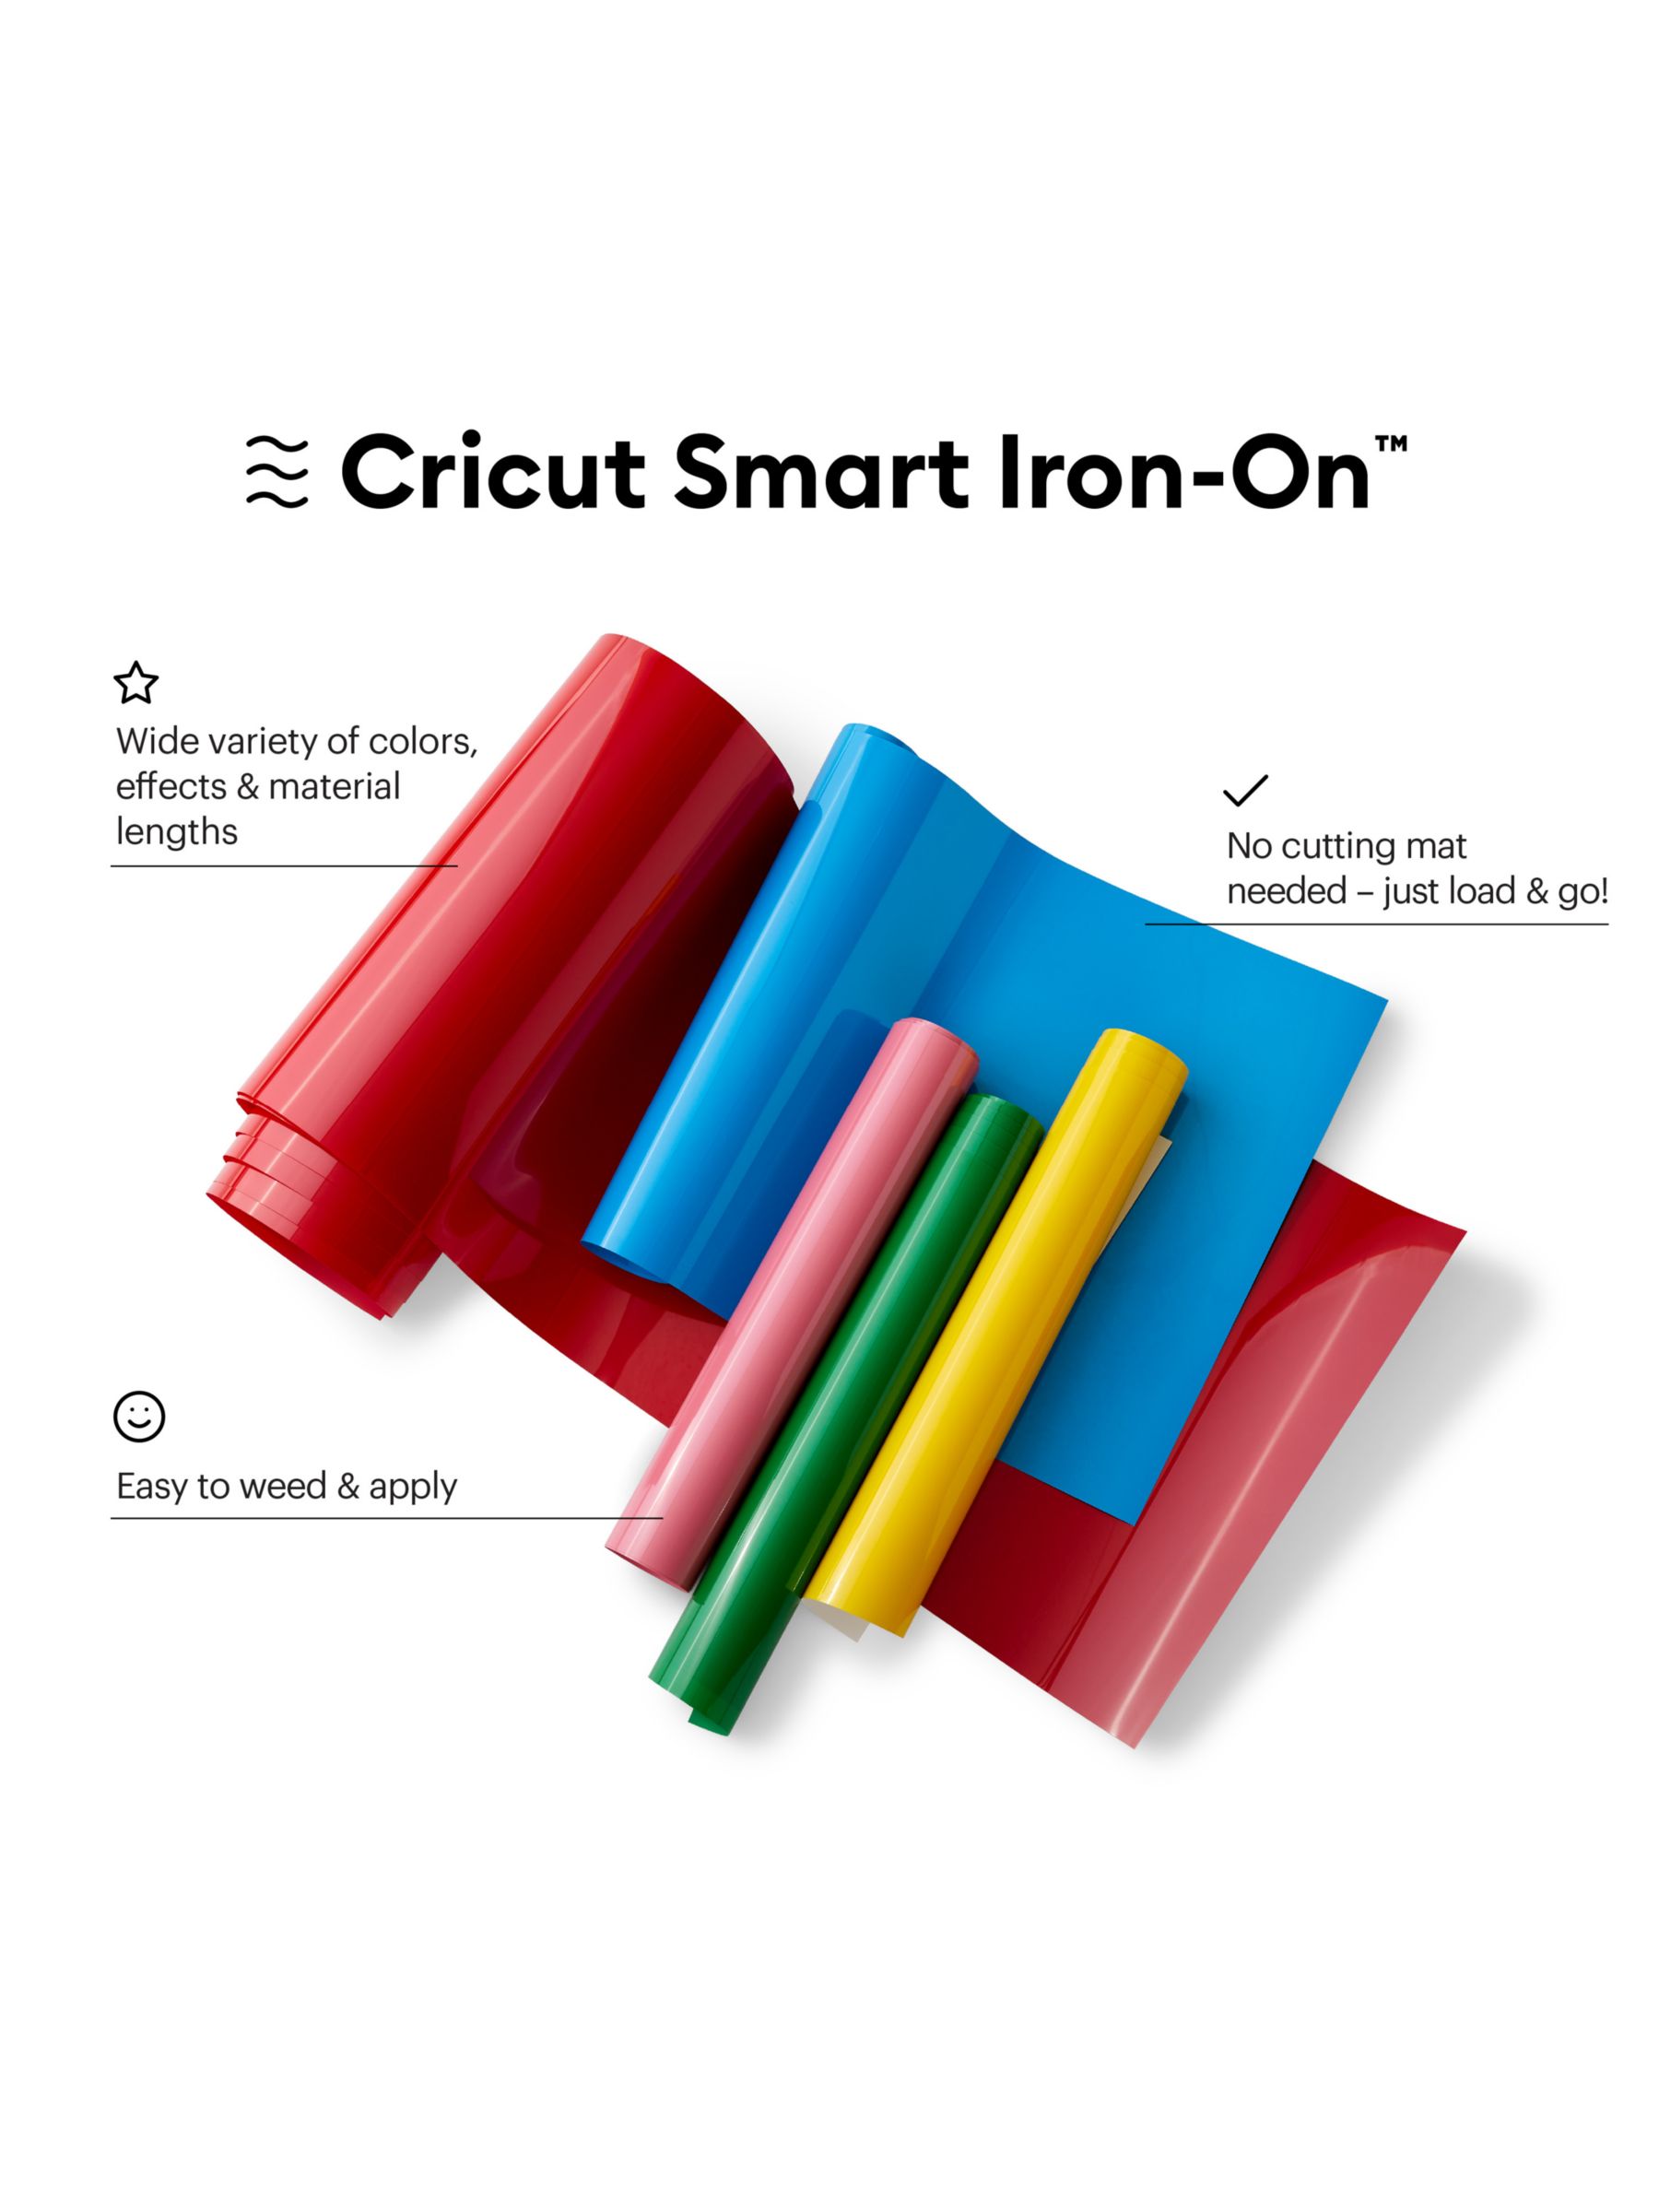 Cricut Smart Iron-On Heat Transfer Vinyl - Gold Glitter, 13 x 3 ft, Roll